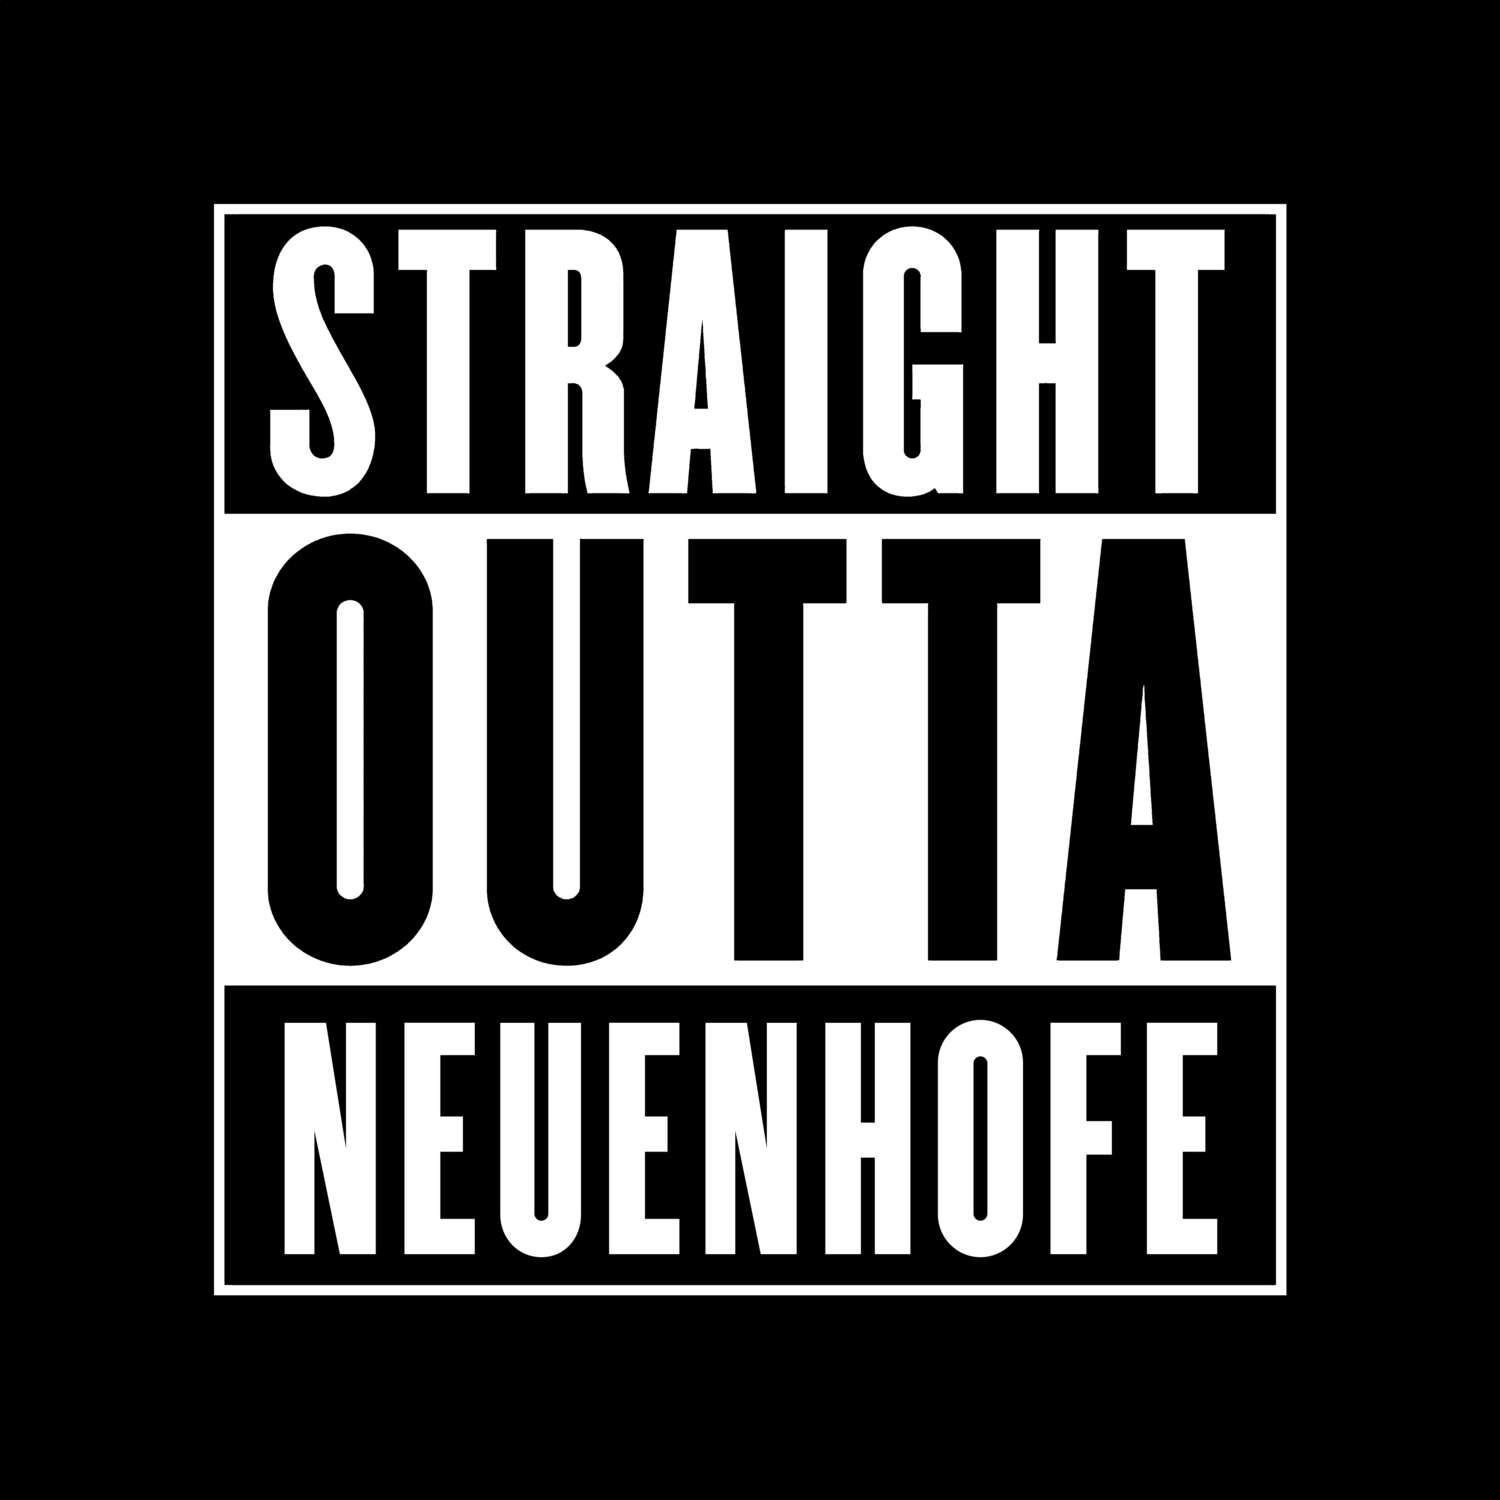 Neuenhofe T-Shirt »Straight Outta«